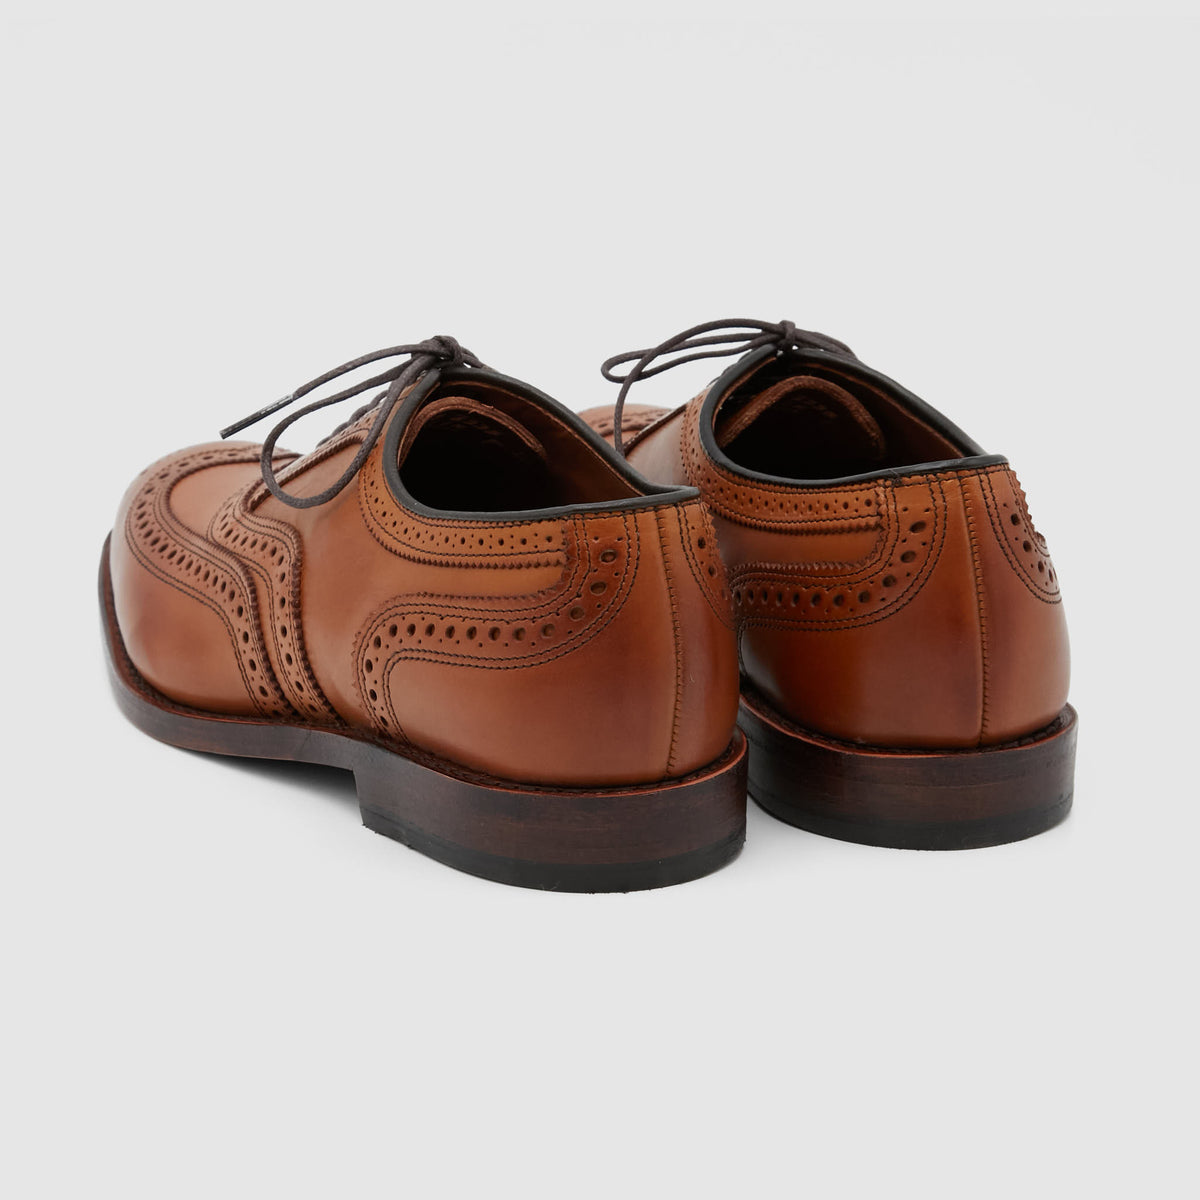 Allen-Edmonds McAllister Wingtip Oxford Shoe